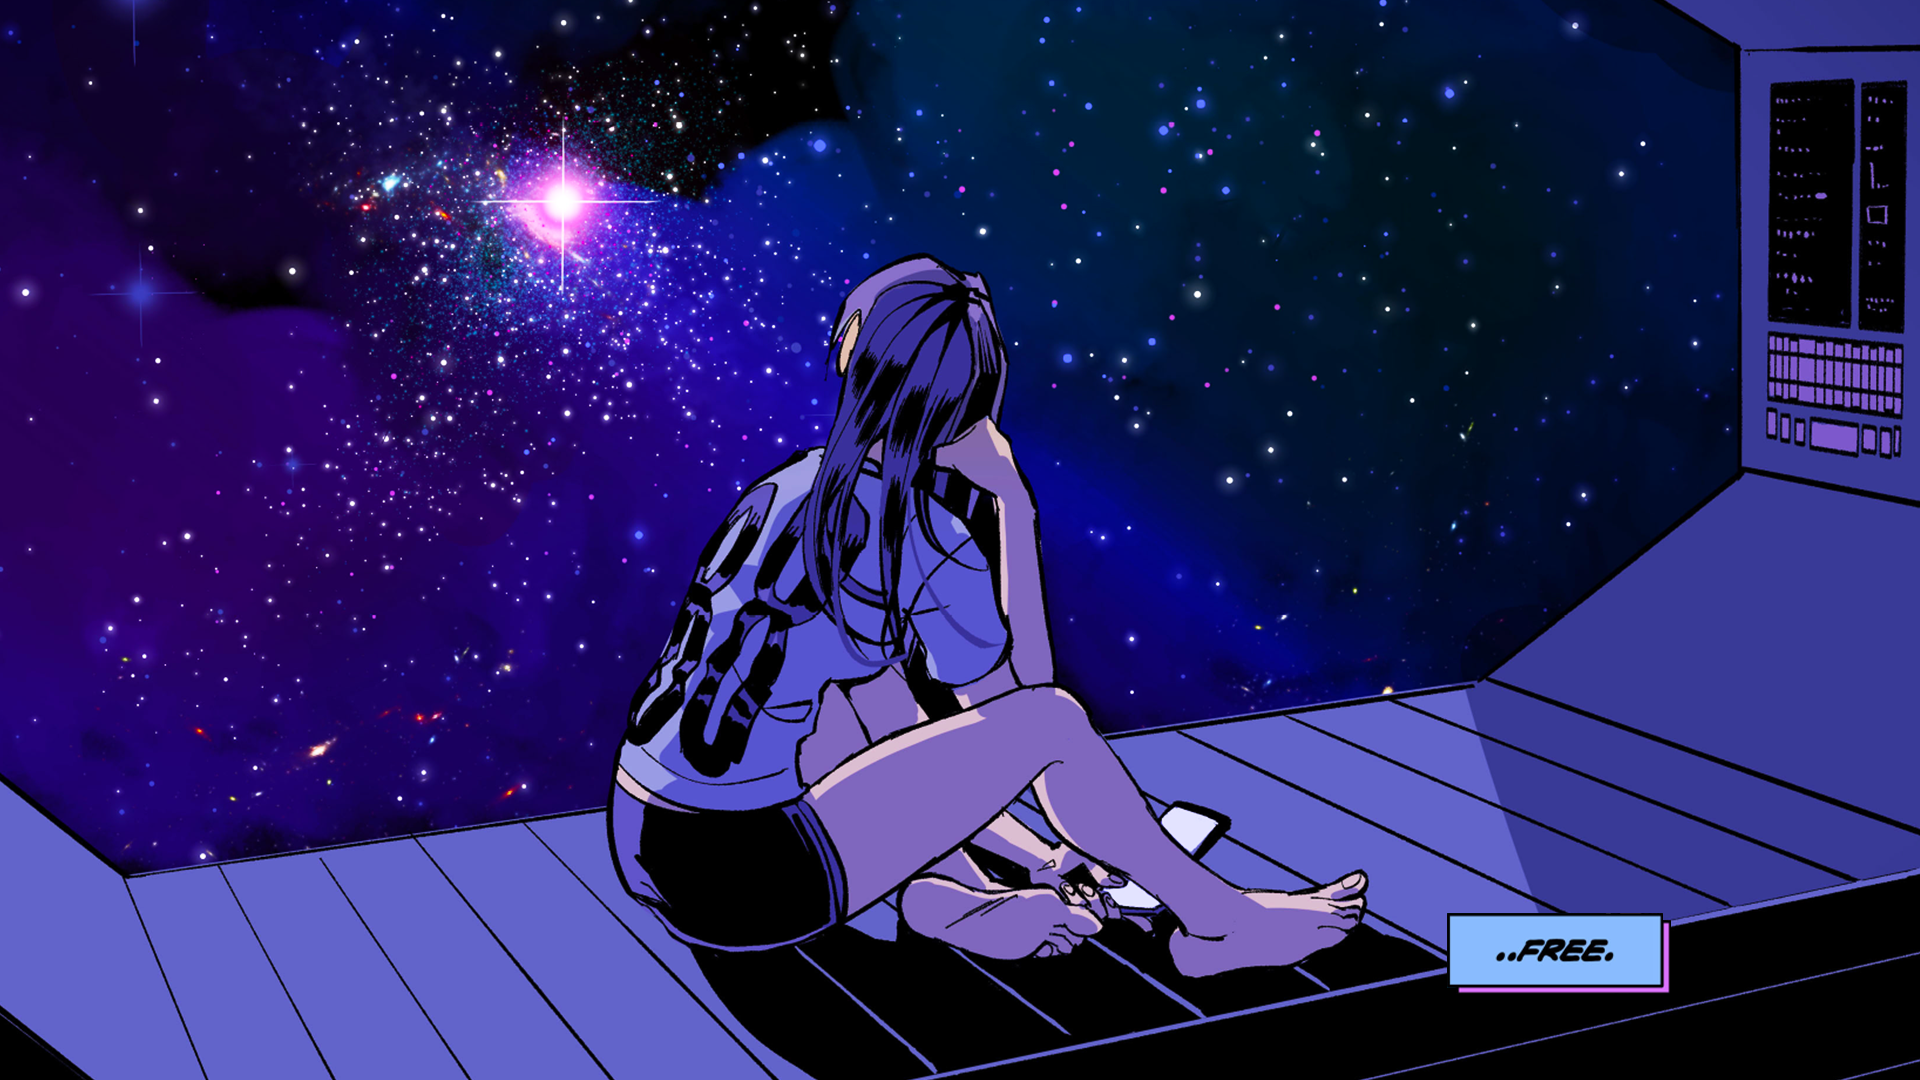 General 1920x1080 vashperado space stars 88 chan spaceship galaxy purple background long hair loneliness comic art